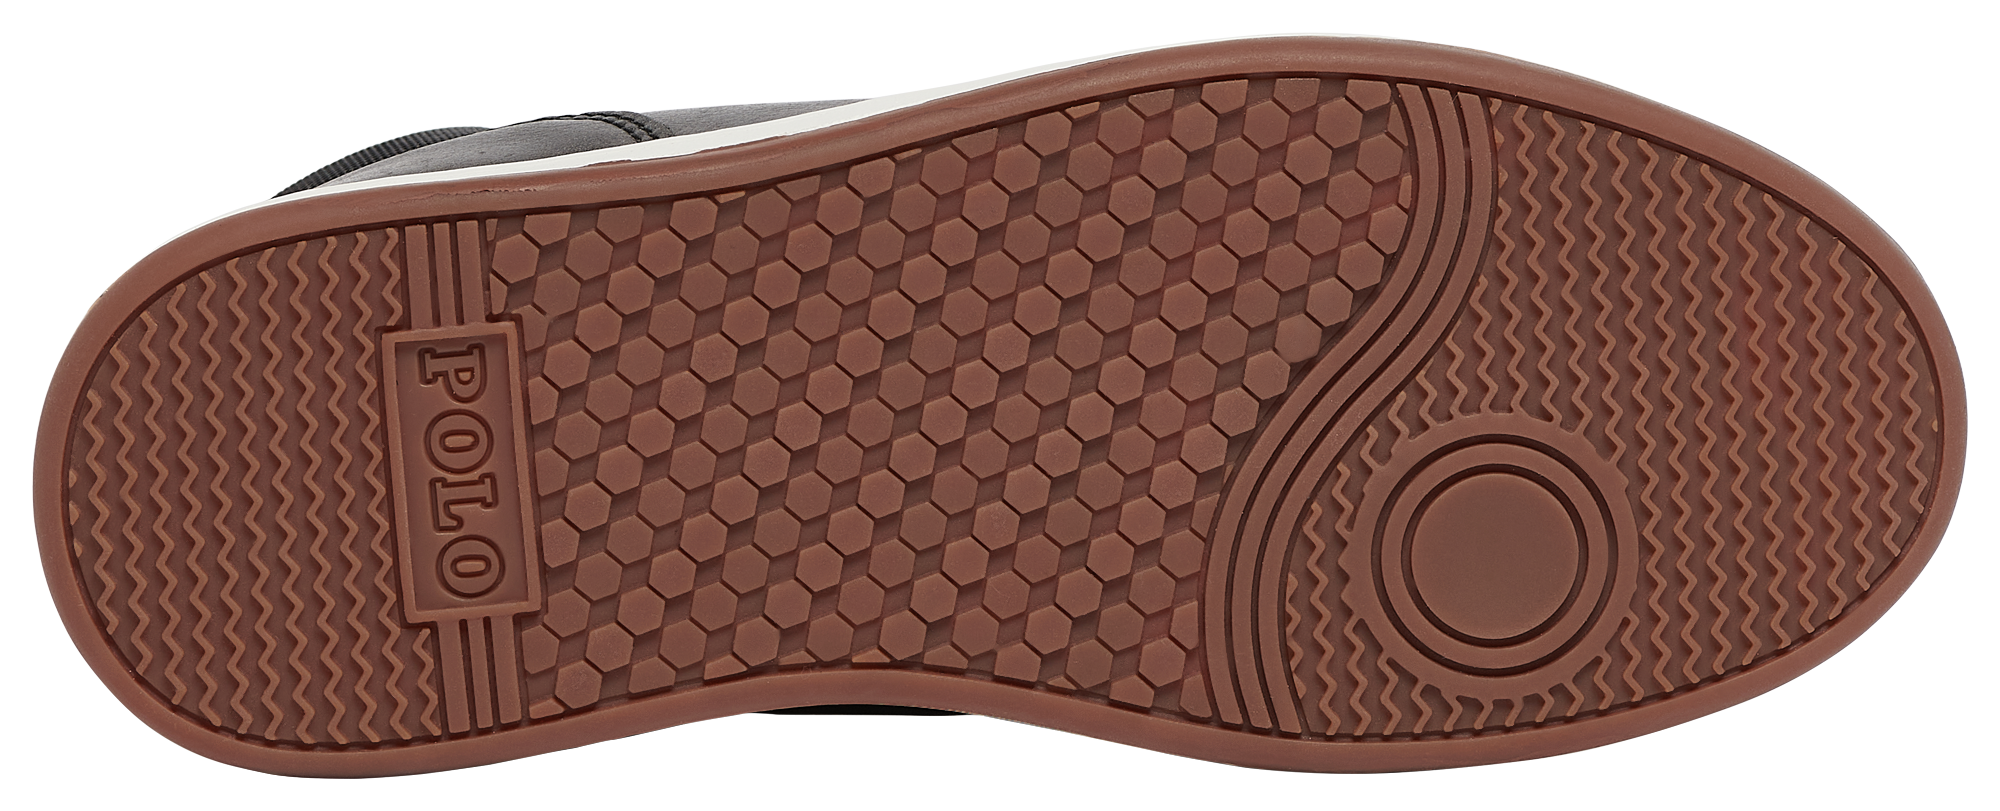 Polo Ralph Lauren Sneaker Boot